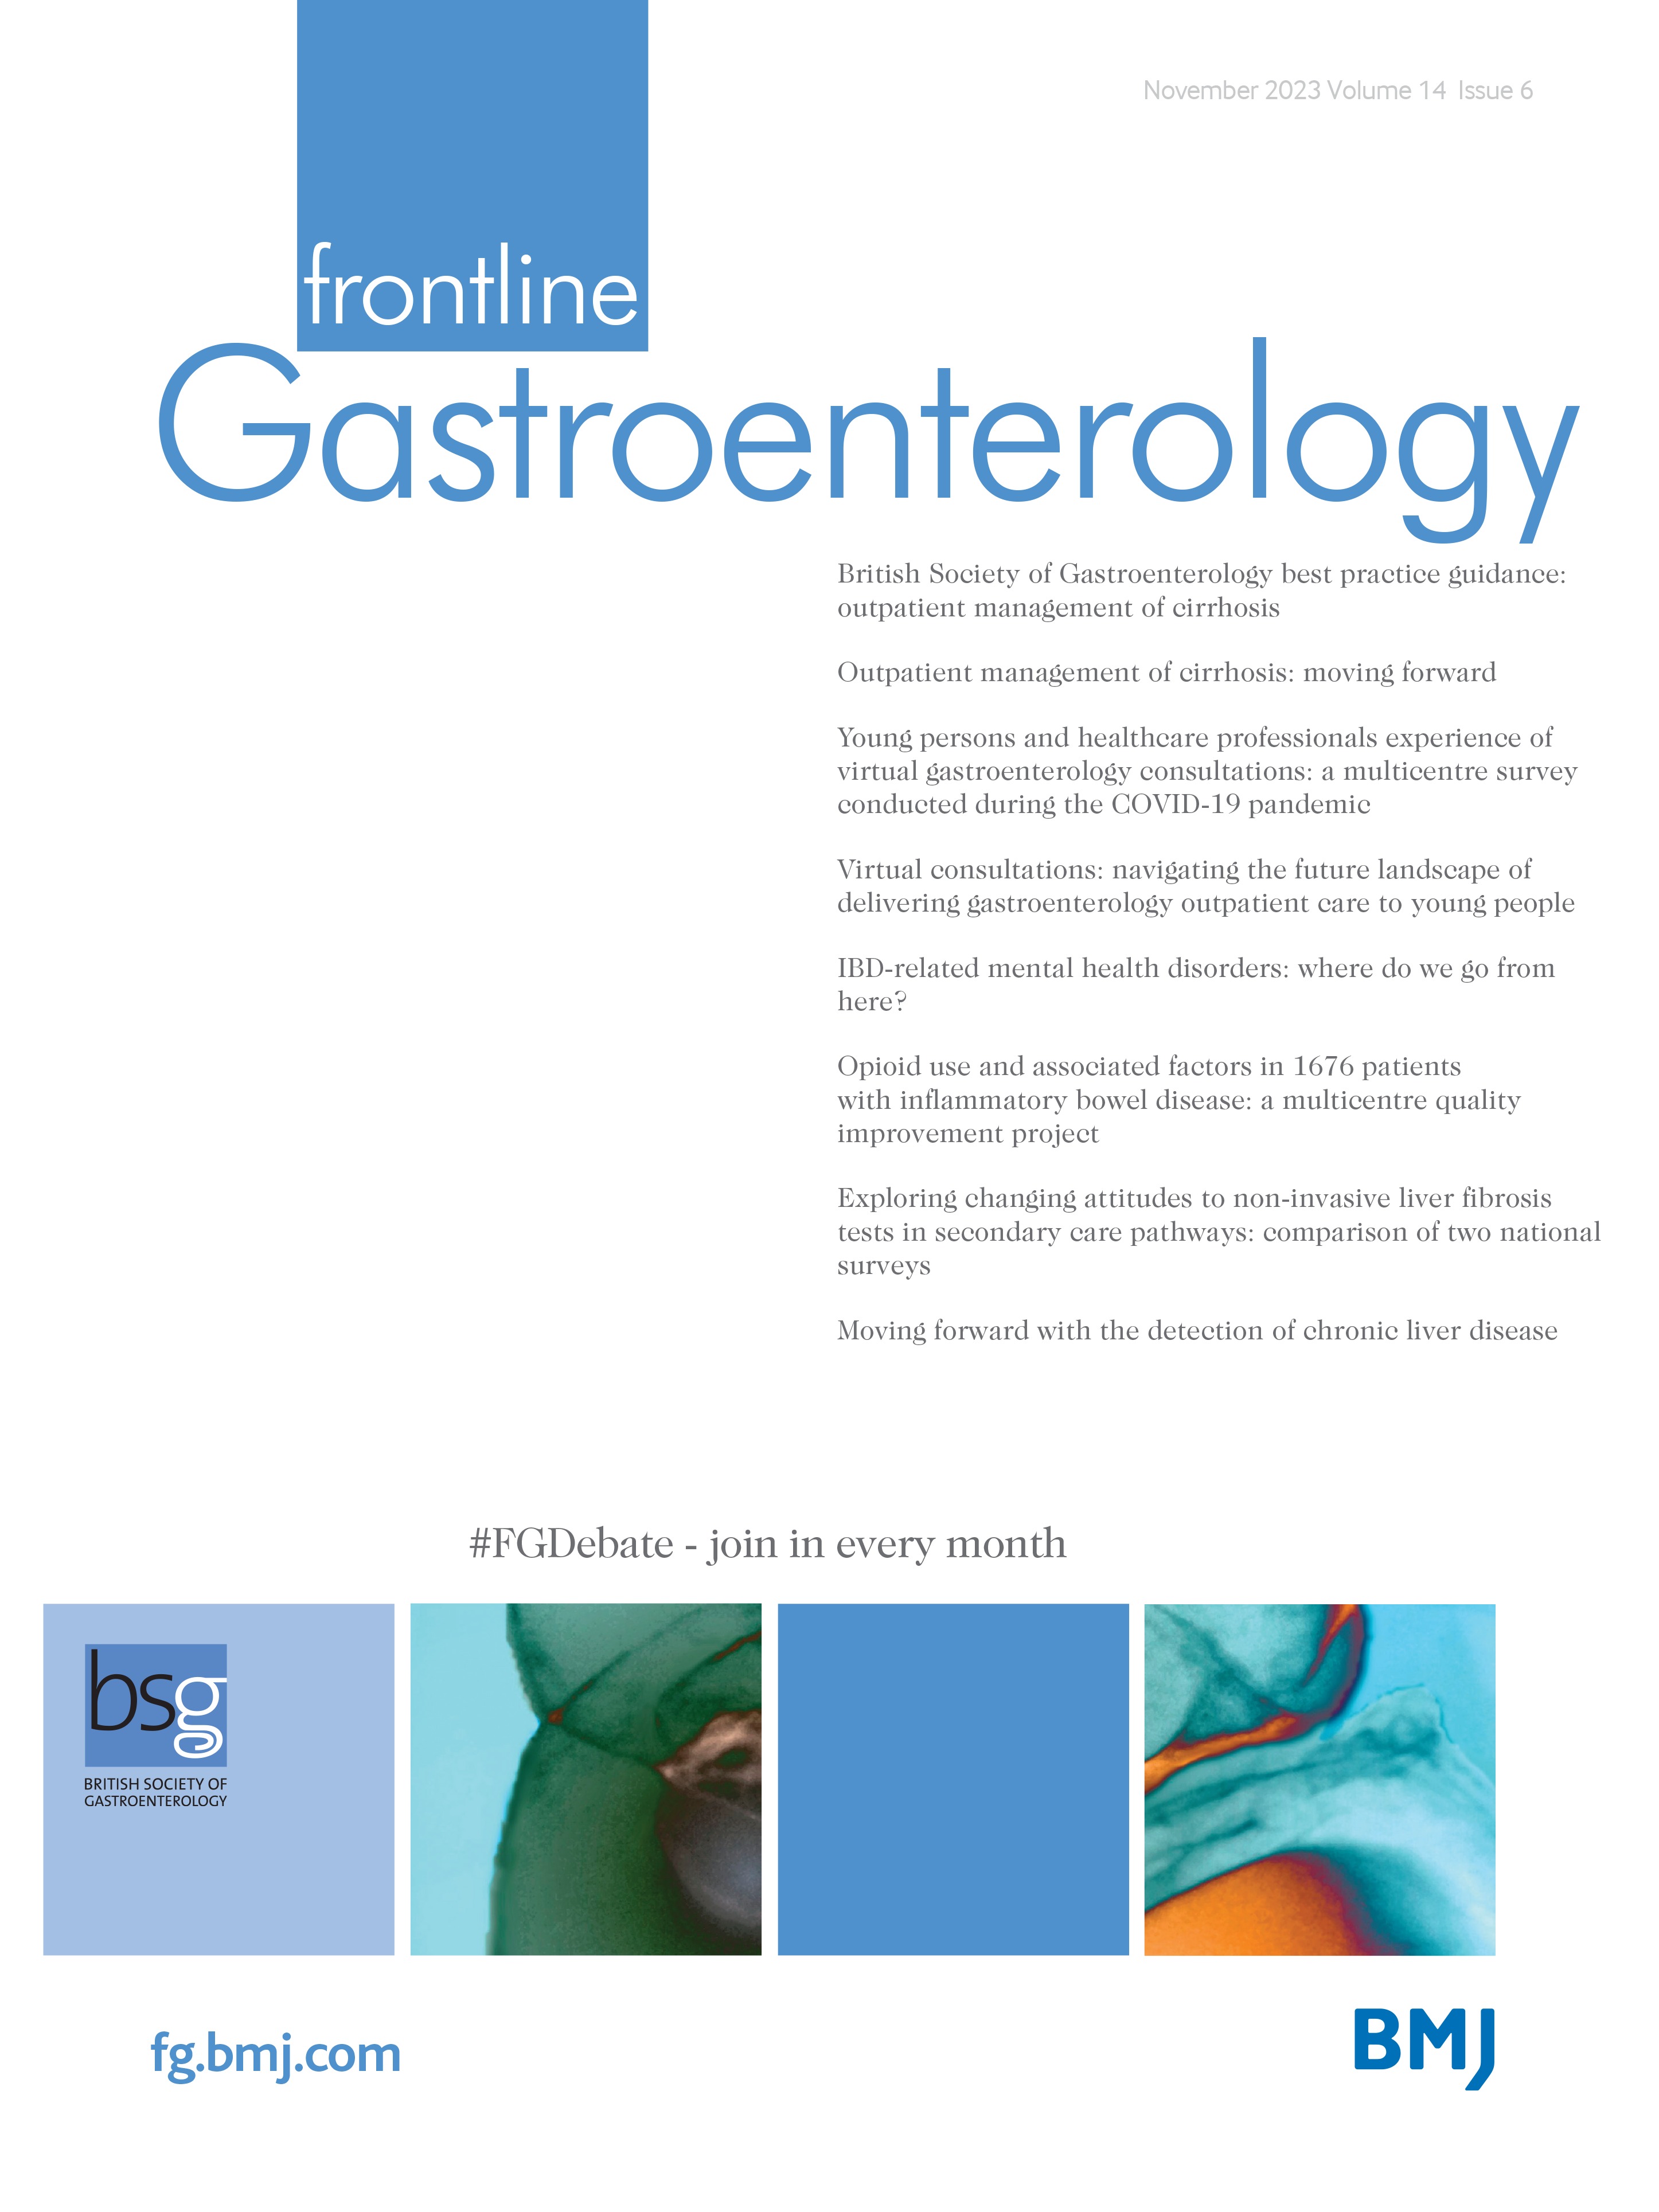 British Society of Gastroenterology Best Practice Guidance: outpatient management of cirrhosis - part 1: compensated cirrhosis